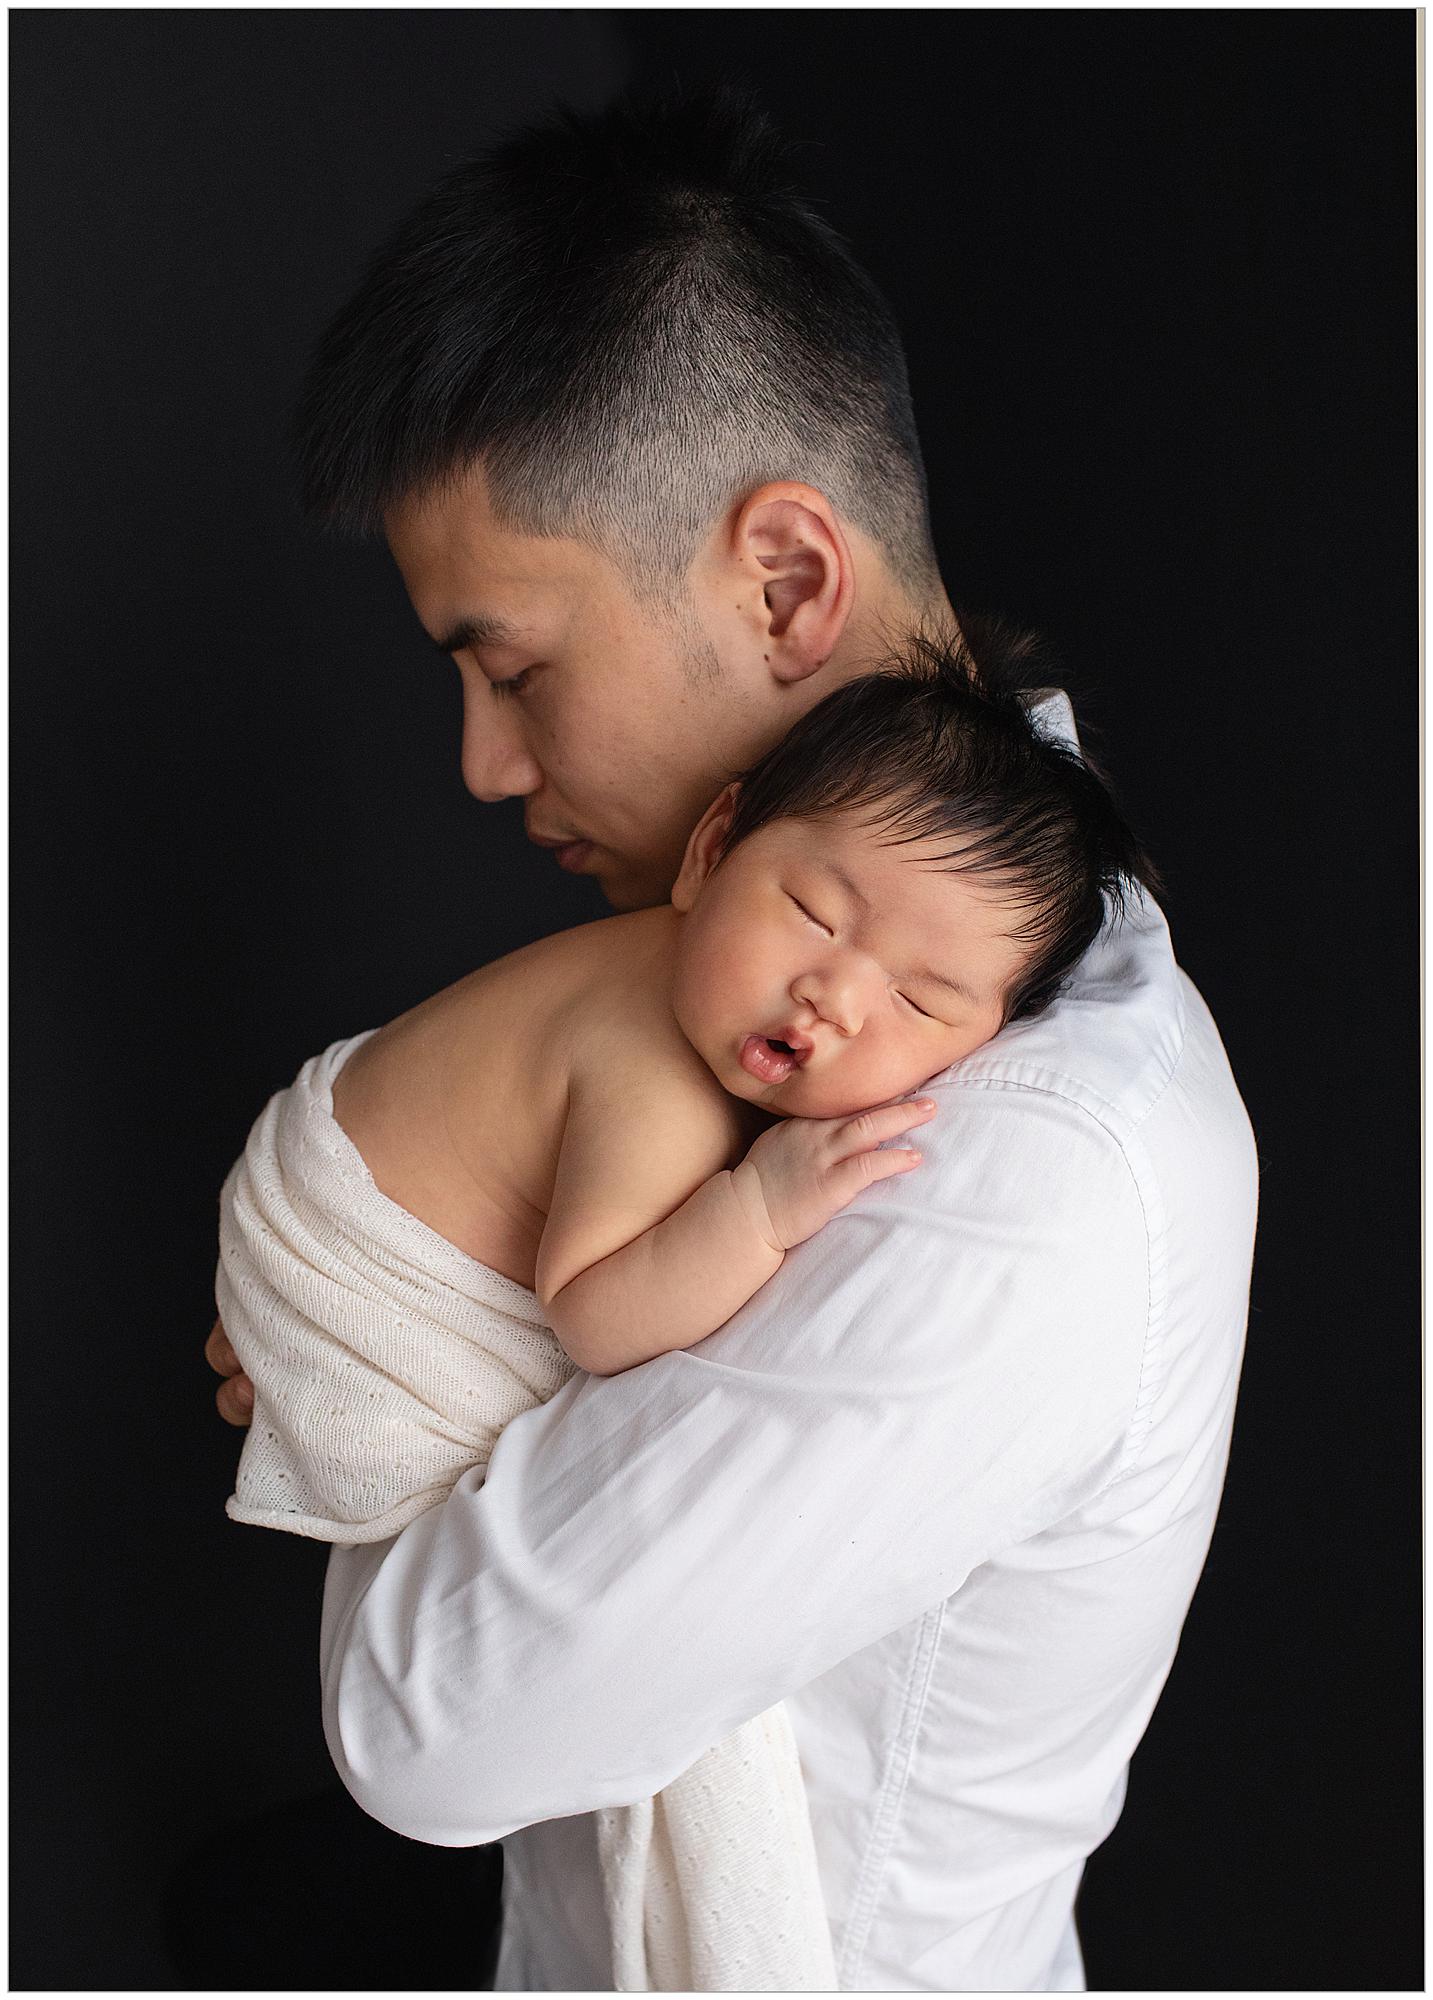 Baby Girl sleeps on her Dad's shoulder